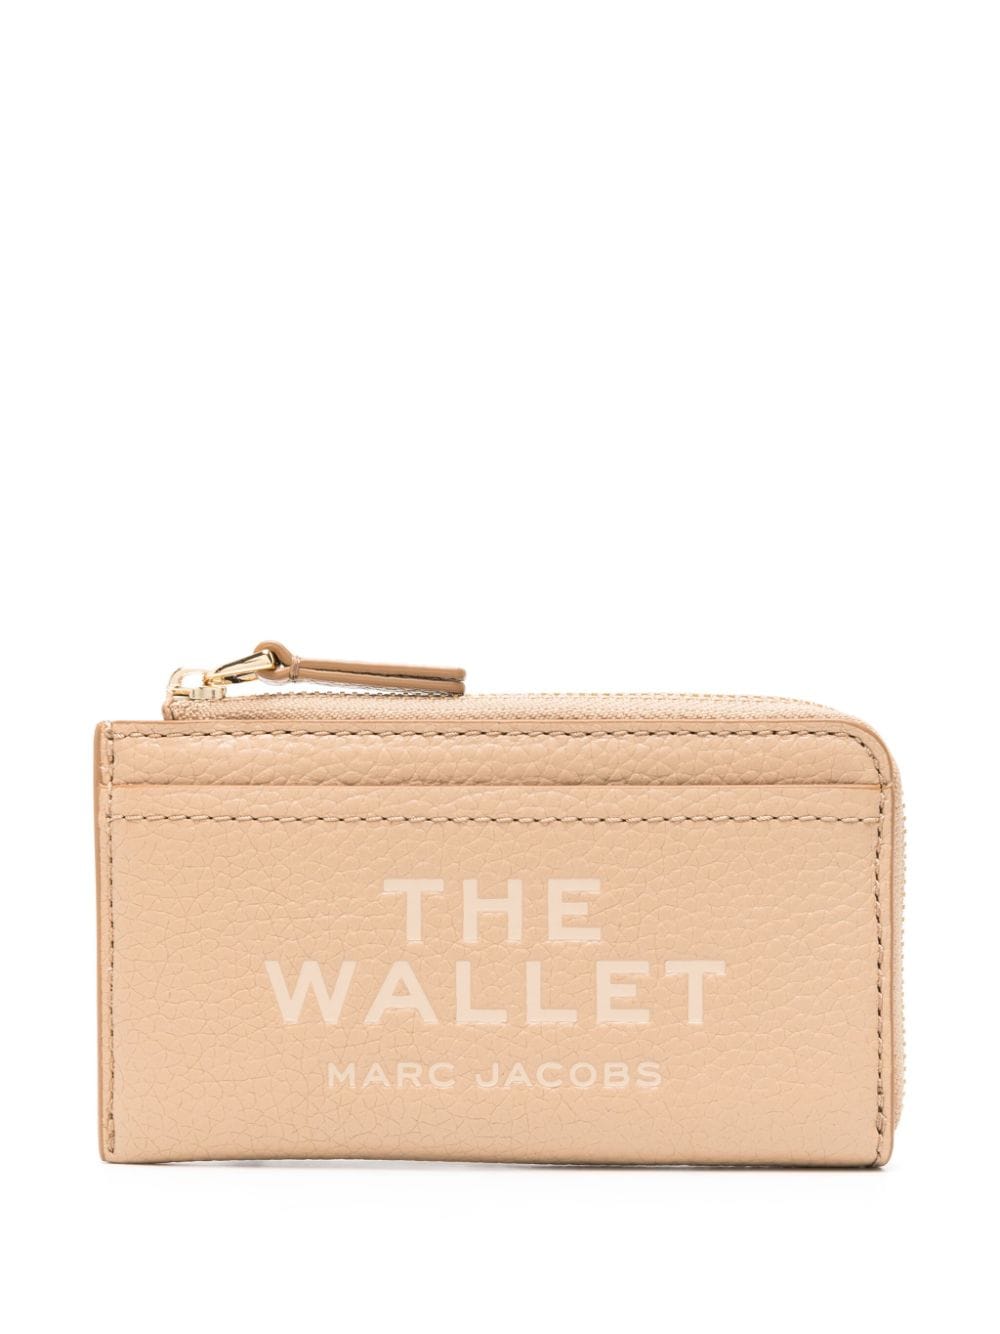 Marc Jacobs The Leather Wallet - Neutrals von Marc Jacobs